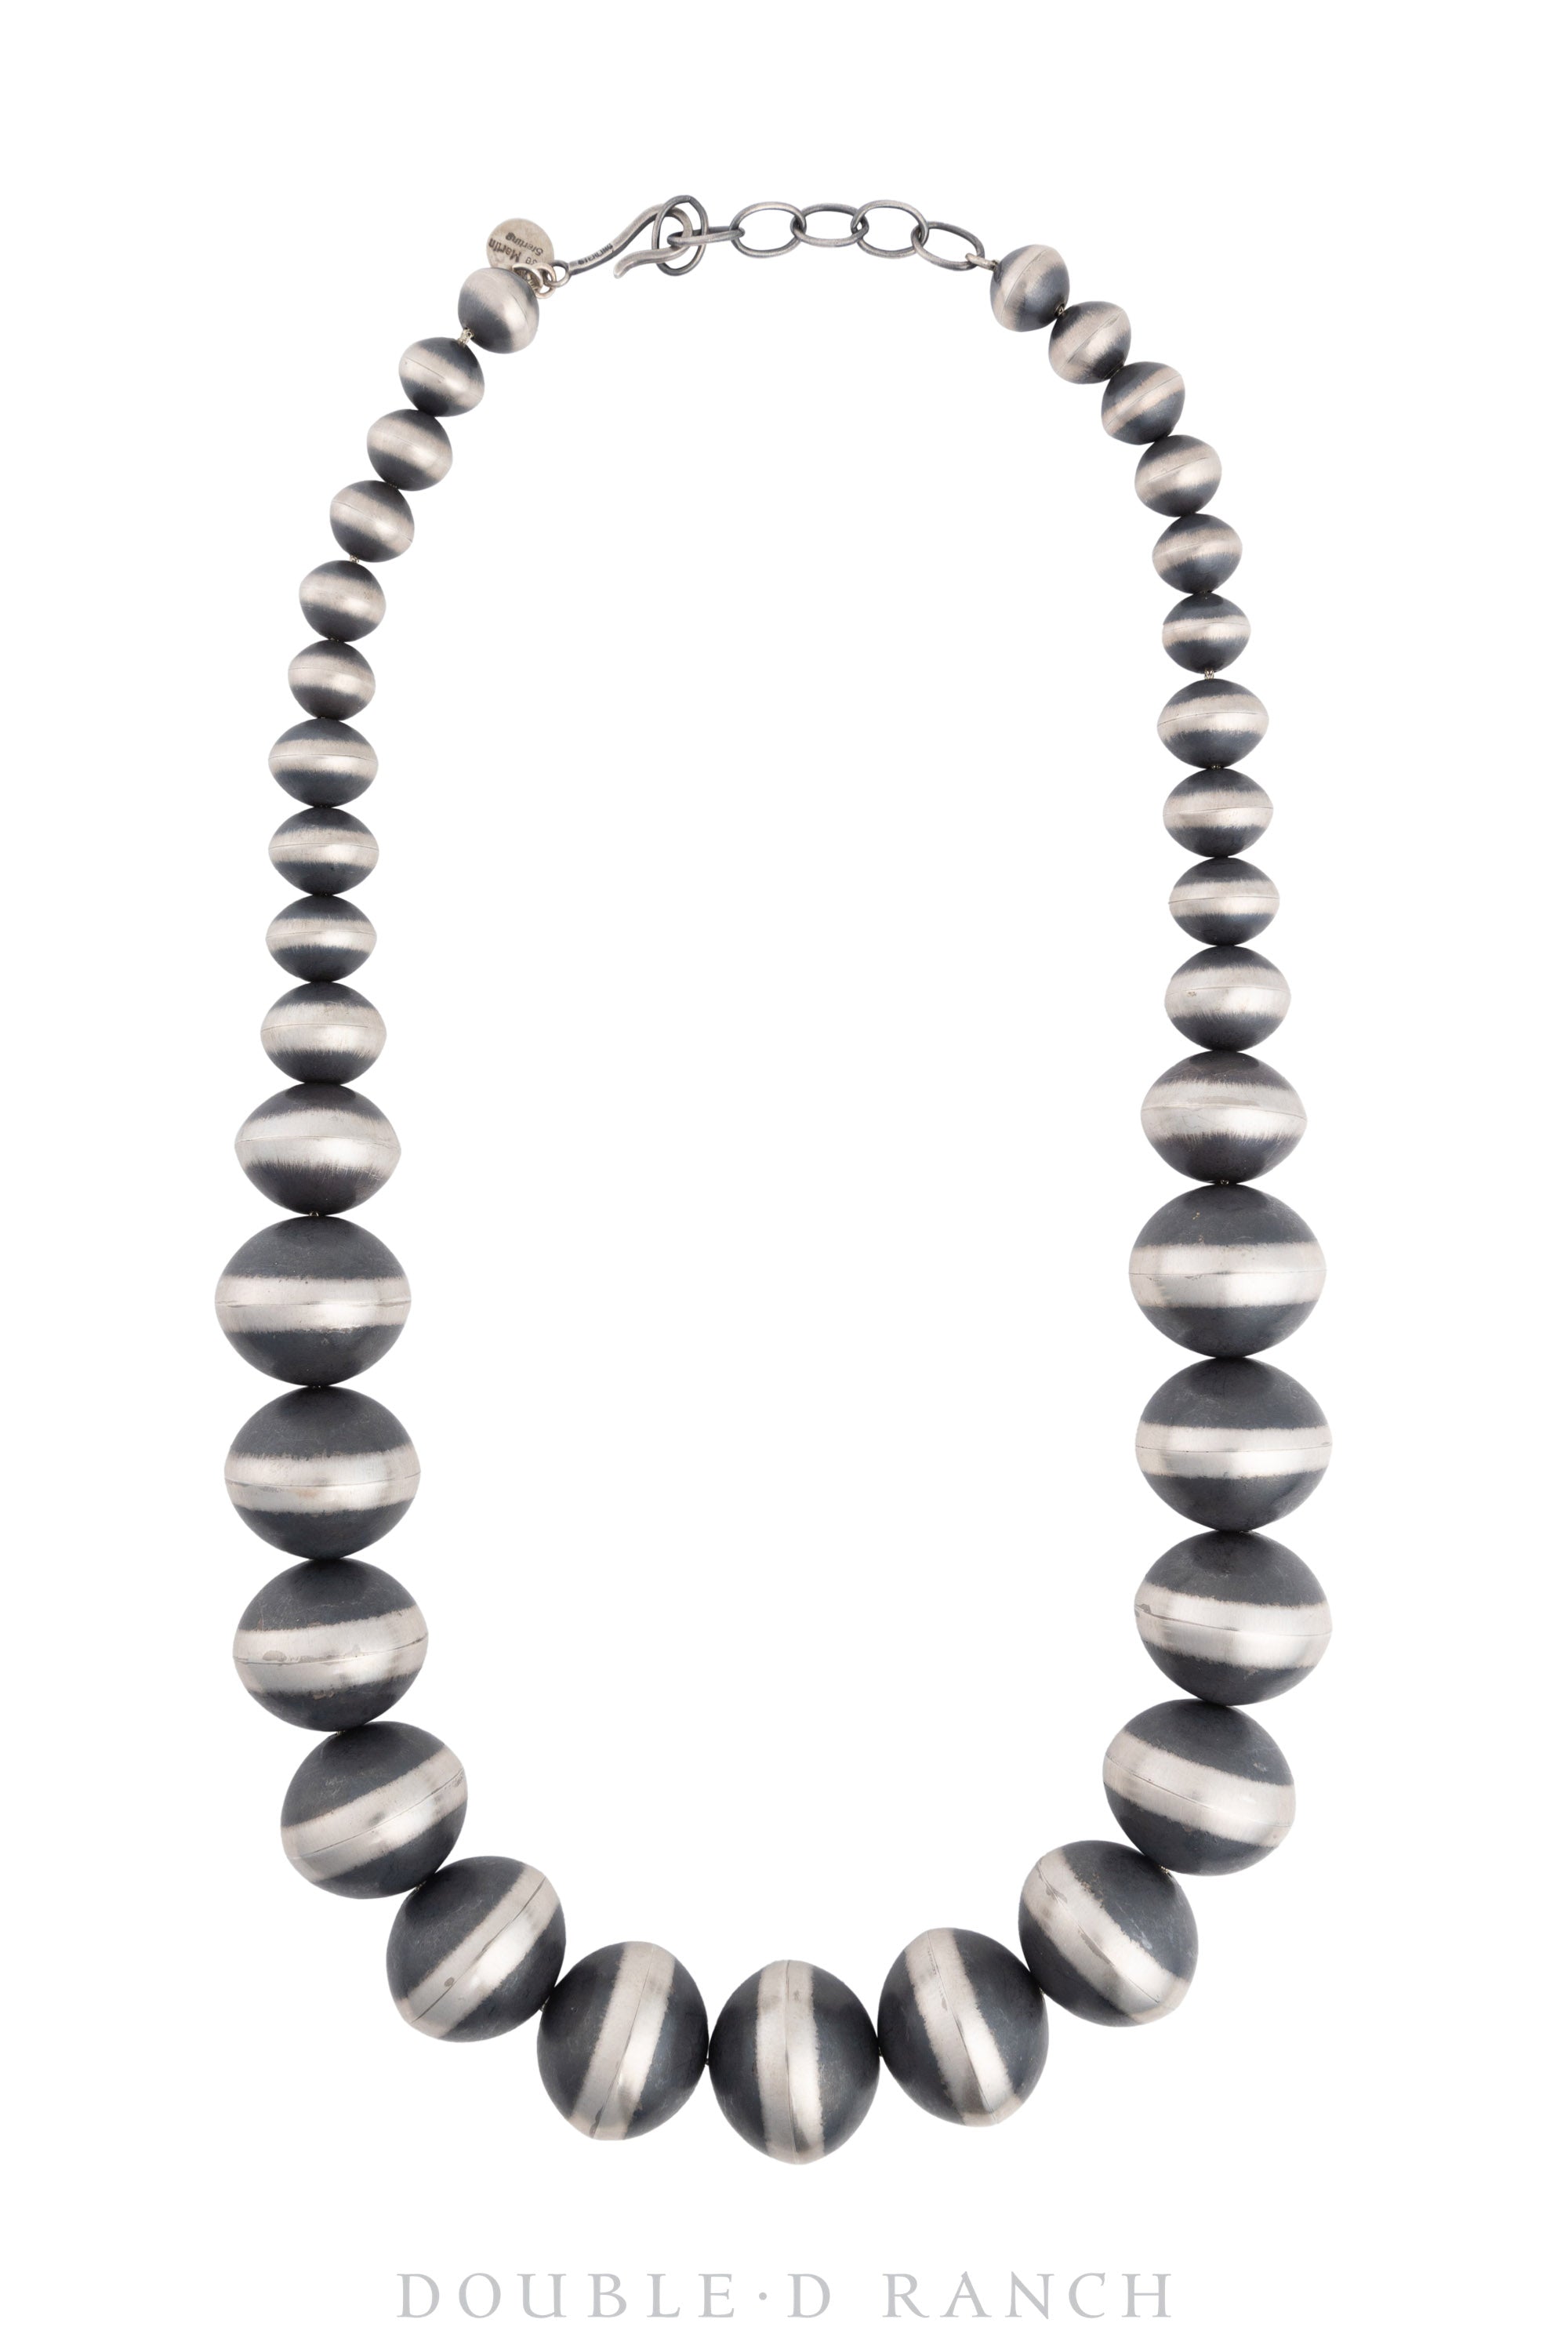 Necklace, Desert Pearls, Sterling Silver, Single Strand, Graduated 28", Hallmark, Contemporary, 3110